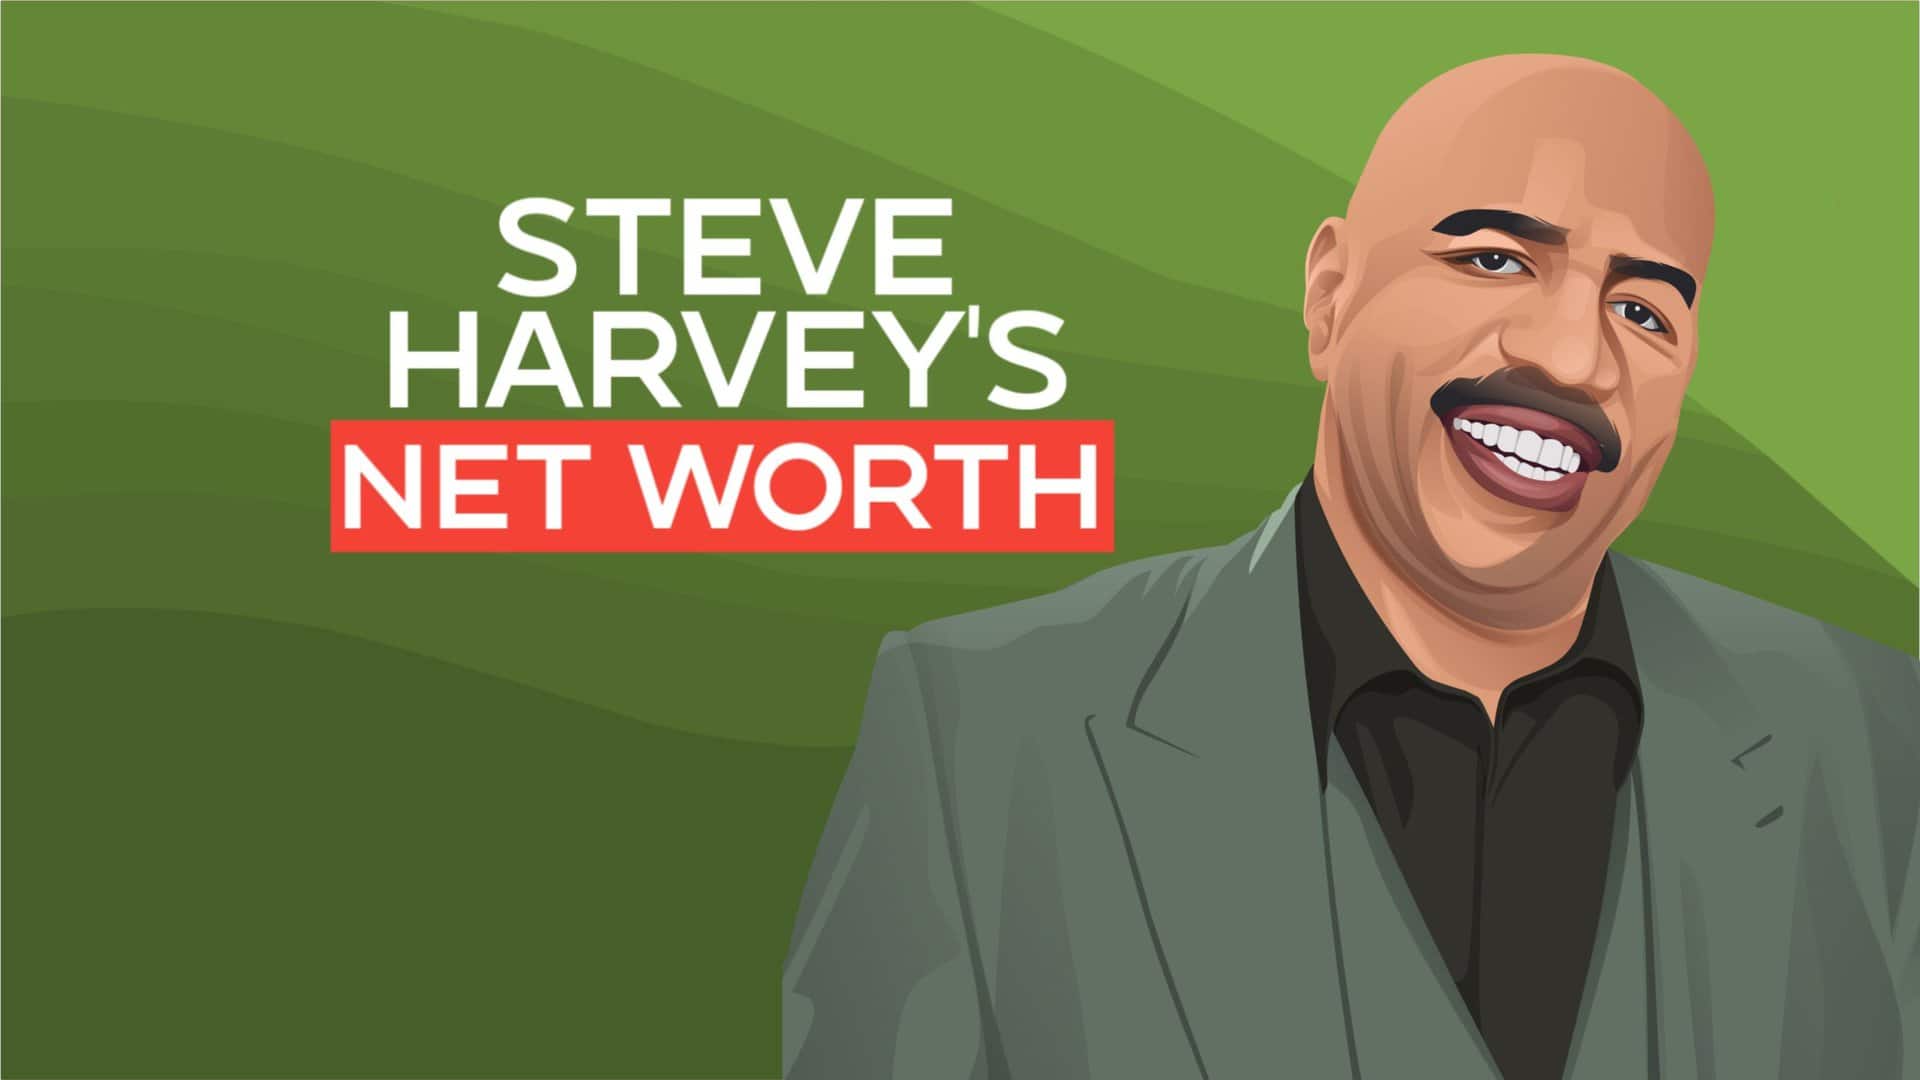 Steve Harvey's Net Worth and Story